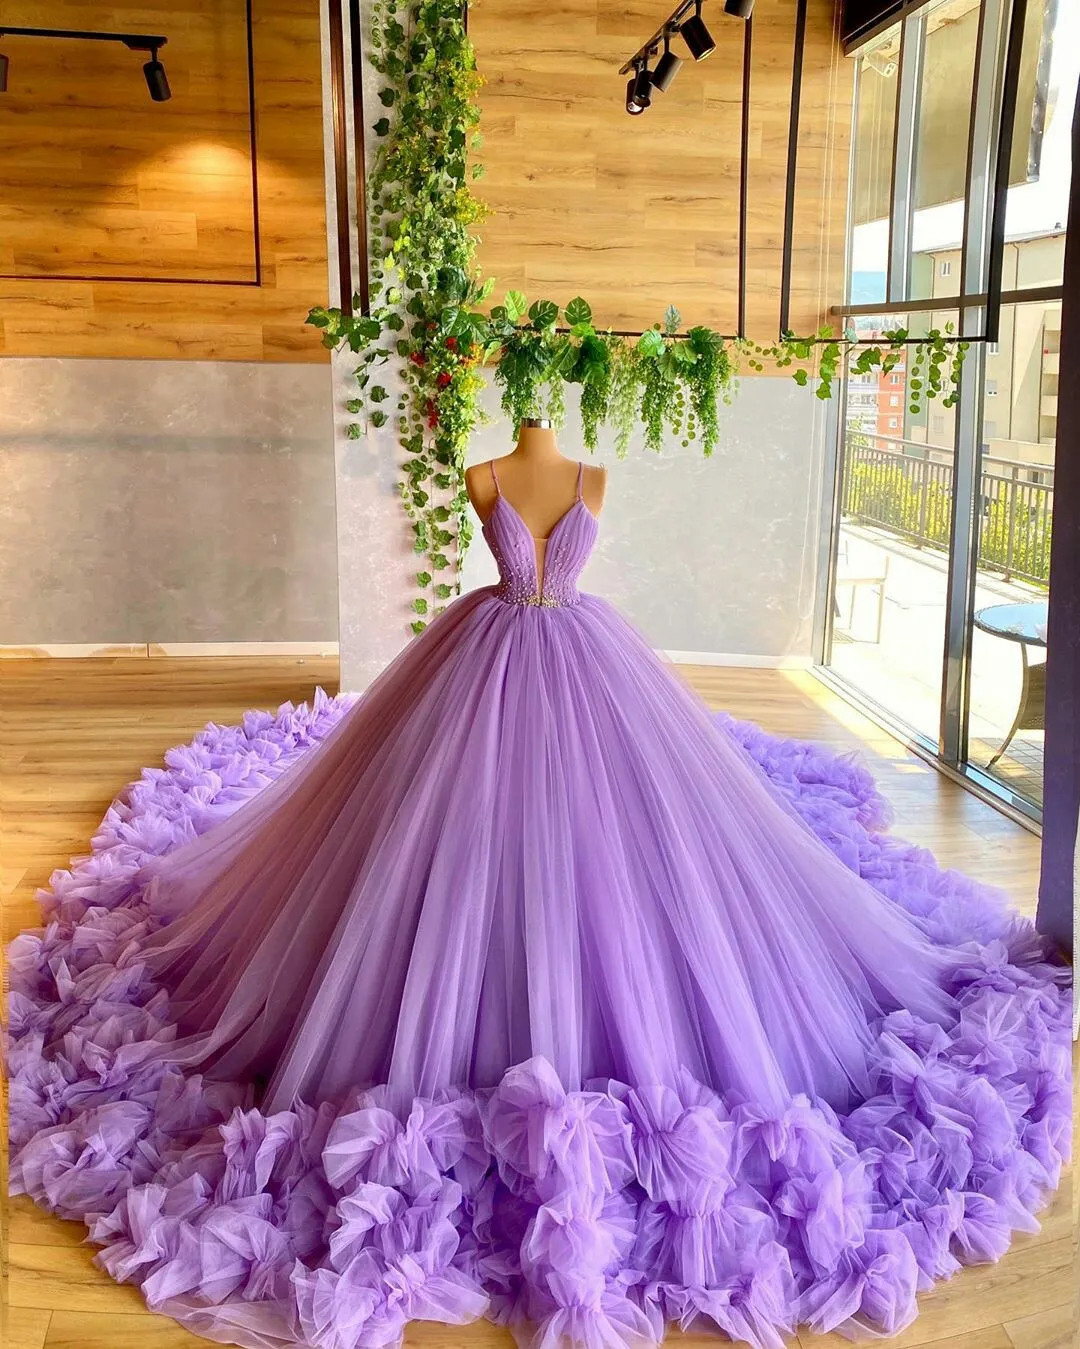 28 Non-Traditional Wedding Dress Picks That Wow